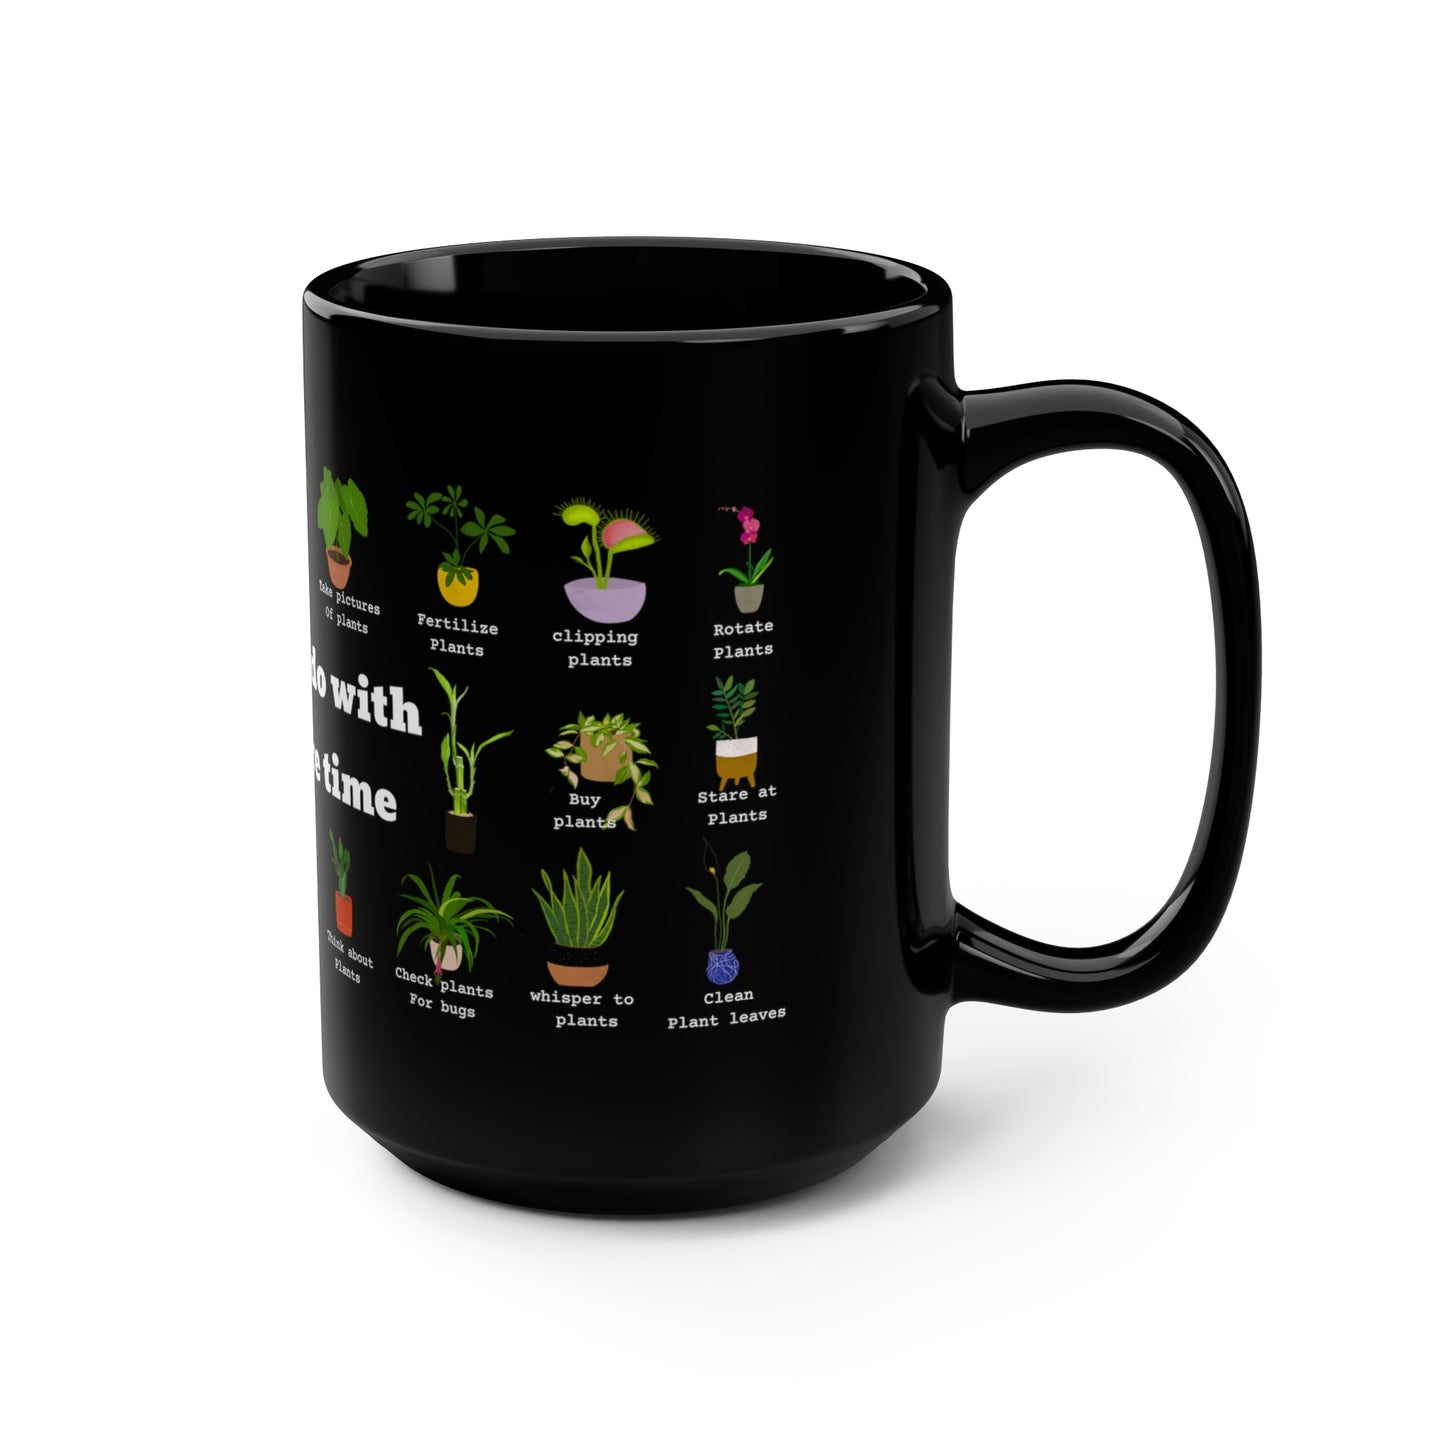 Things I do with my spare time plants coffee Mug15oz. Funny plant black mug